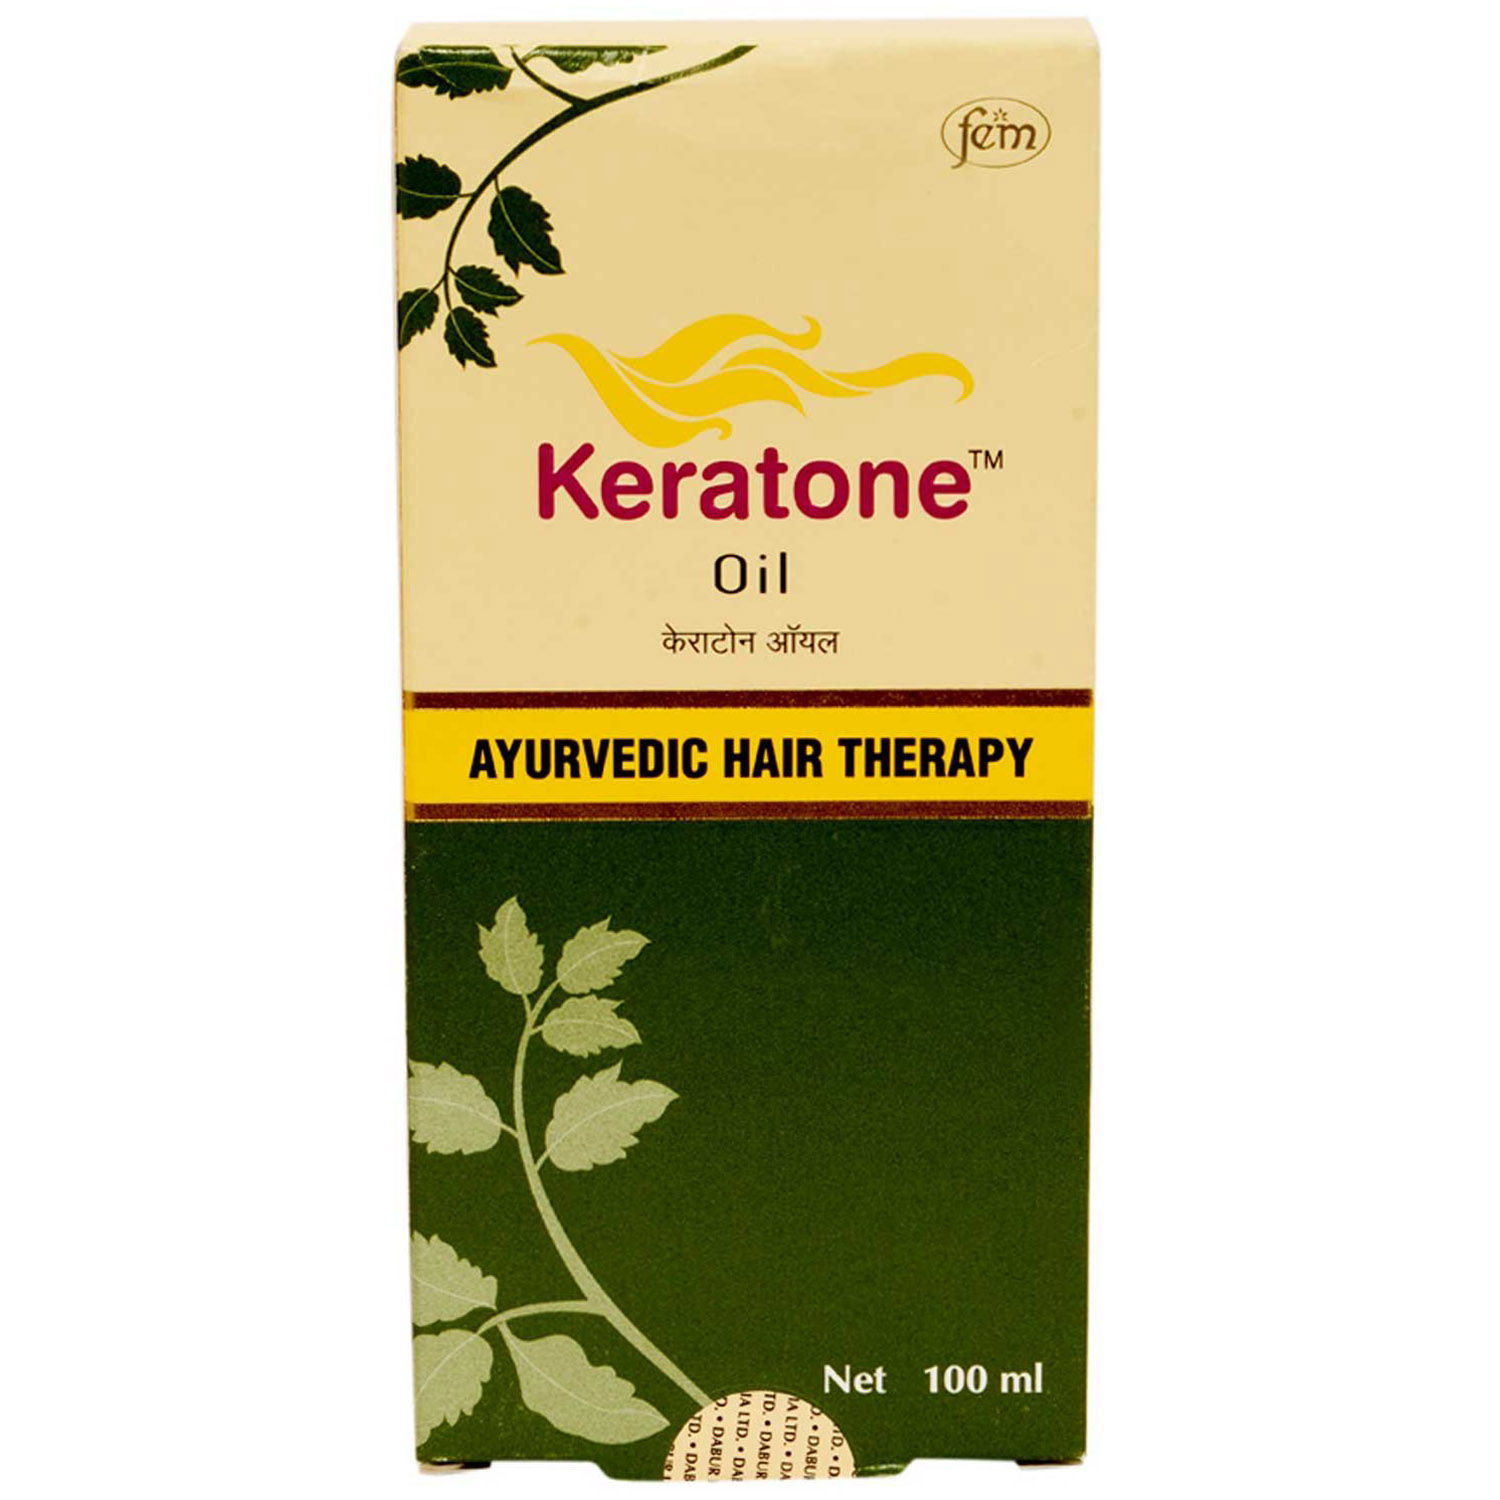 Fem Keratone Oil, 100 ml, Pack of 1 